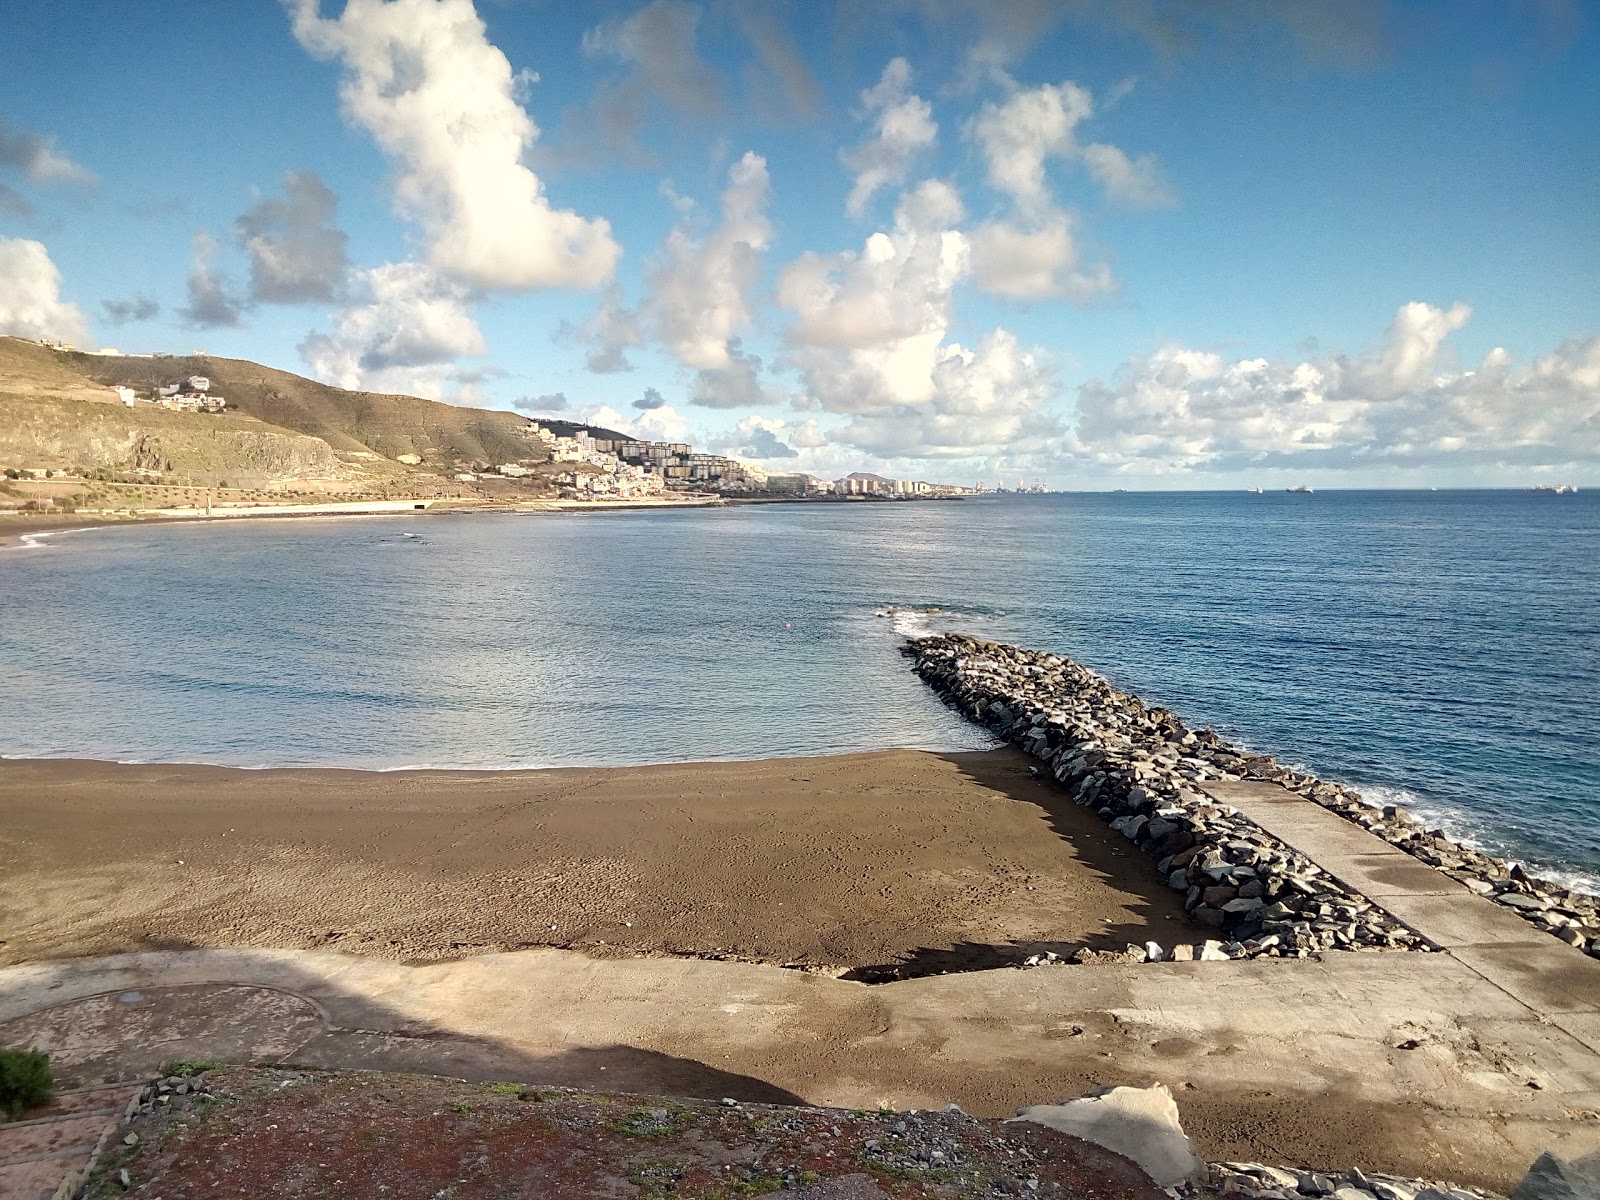 Photo of Playa De La Laja with gray sand surface